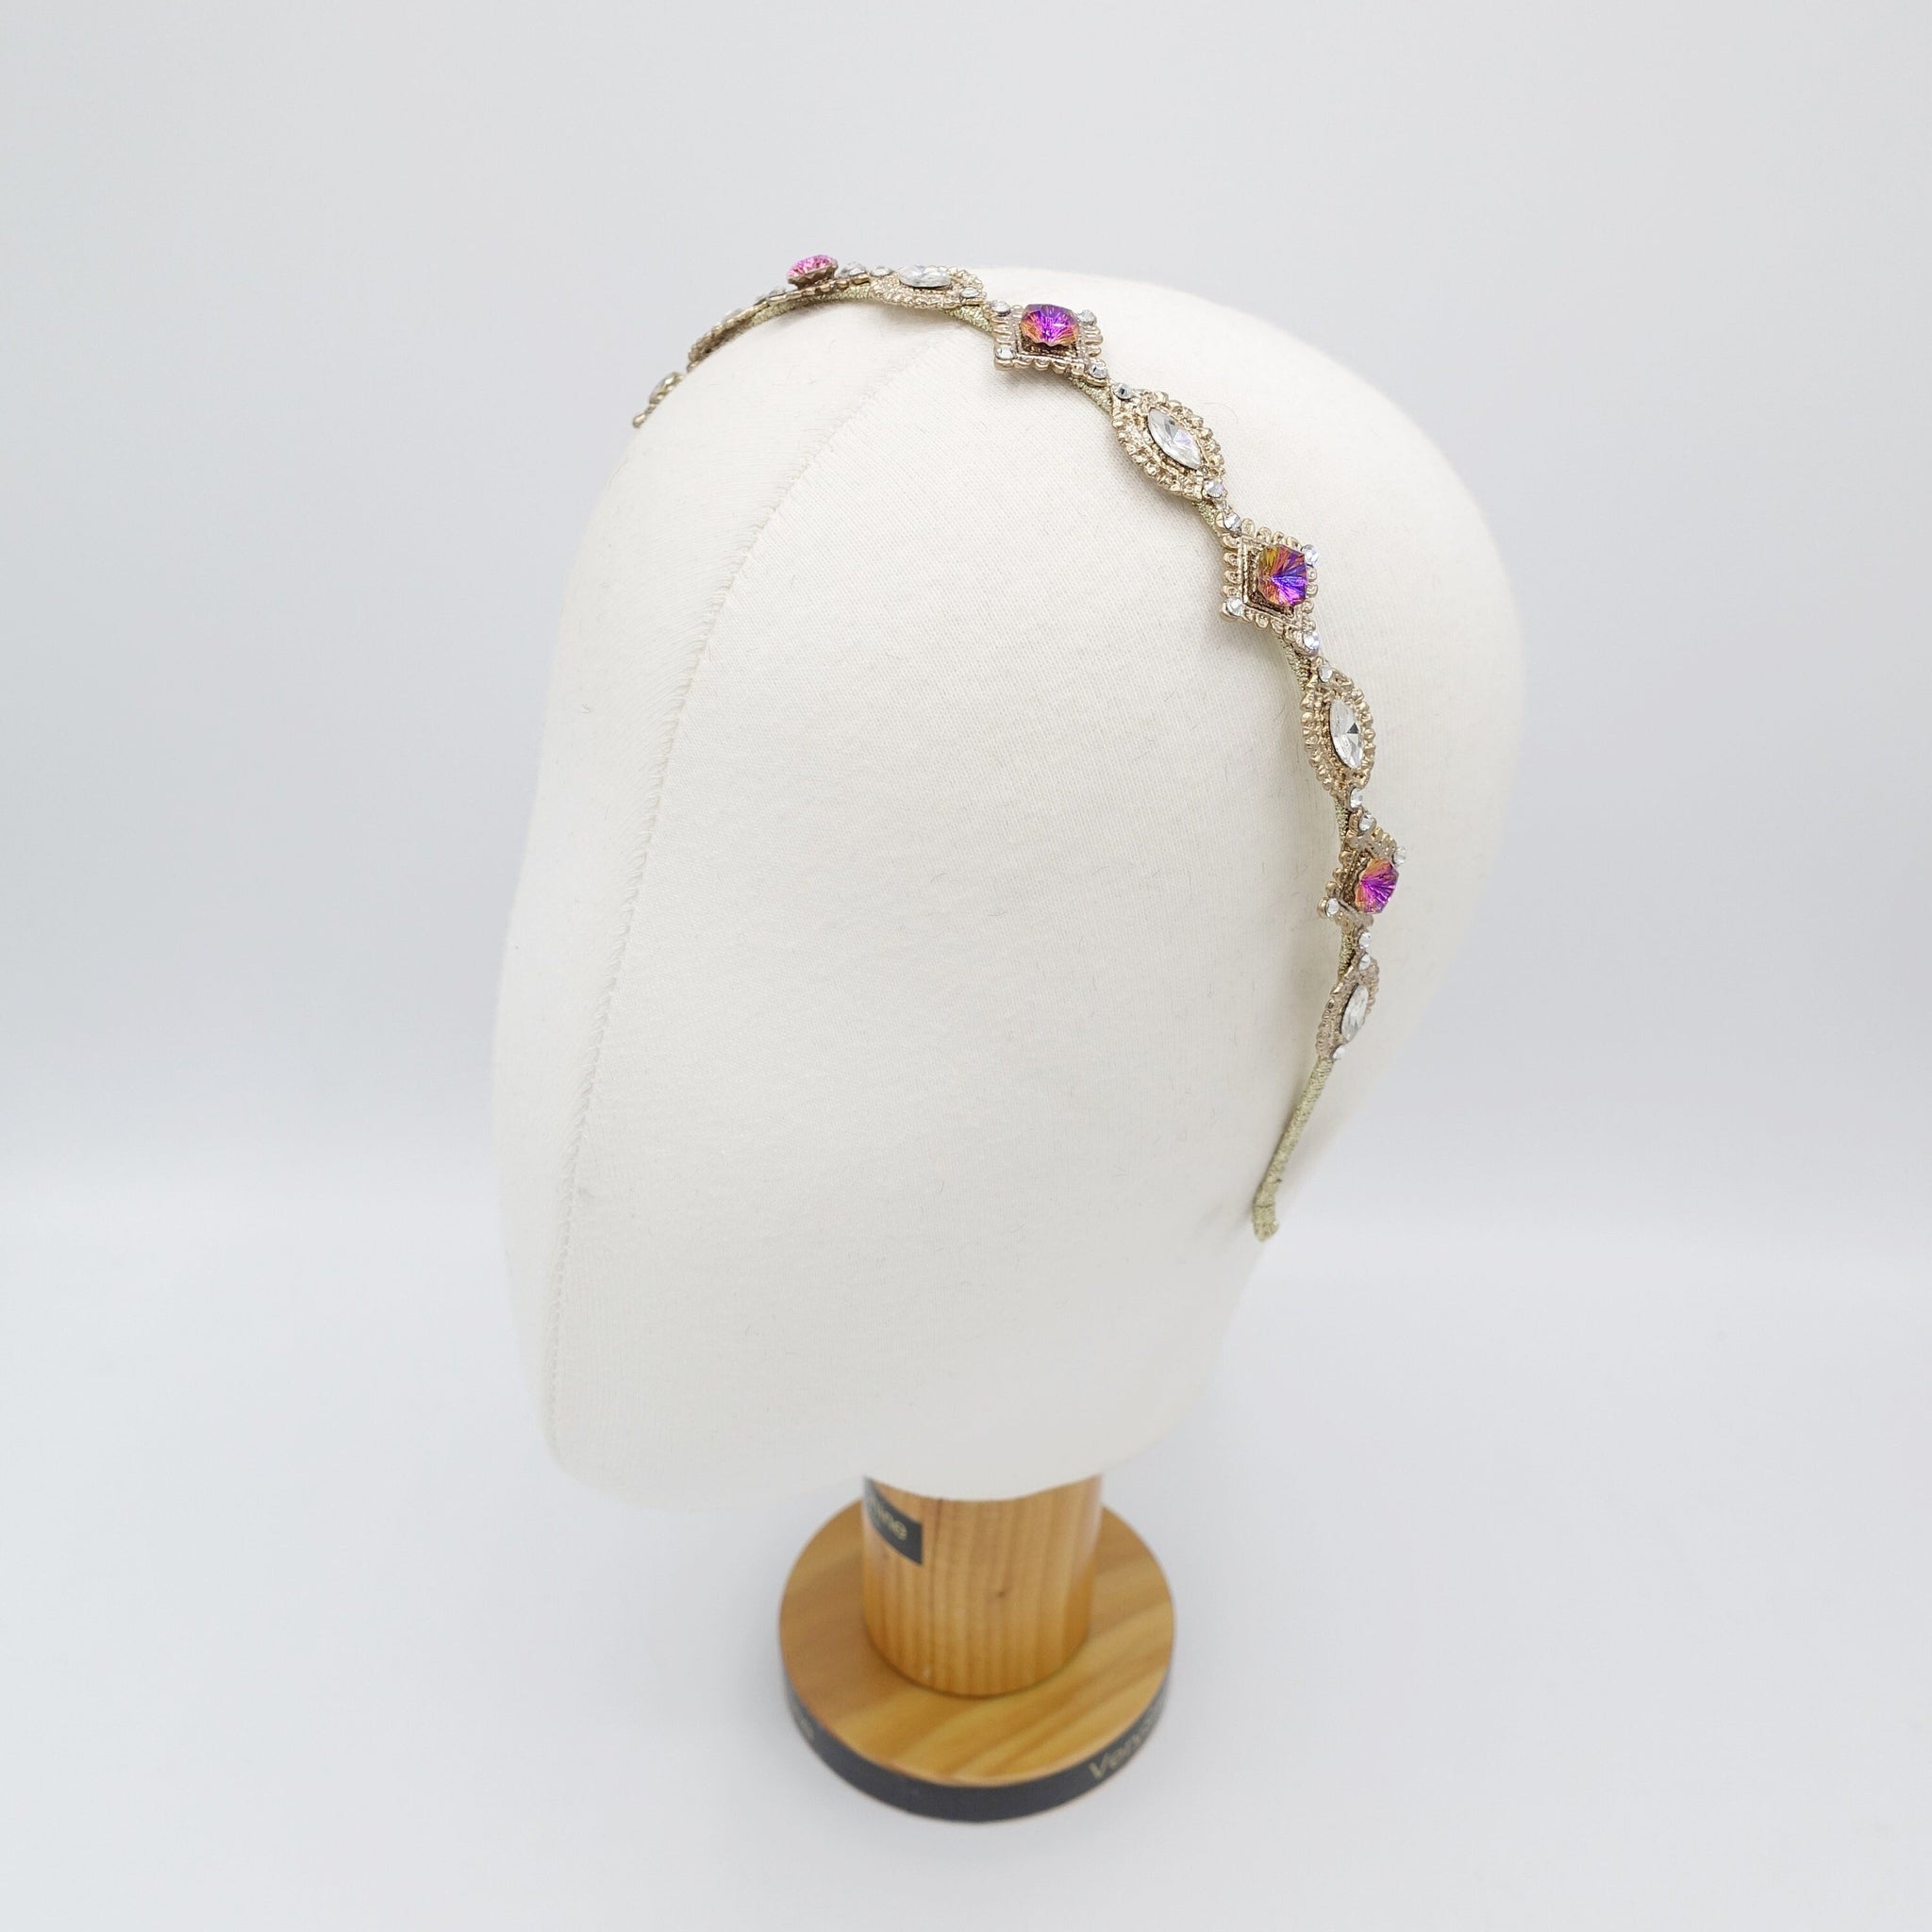 VeryShine vintage thin headband rhinestone embellished metal hairband for women